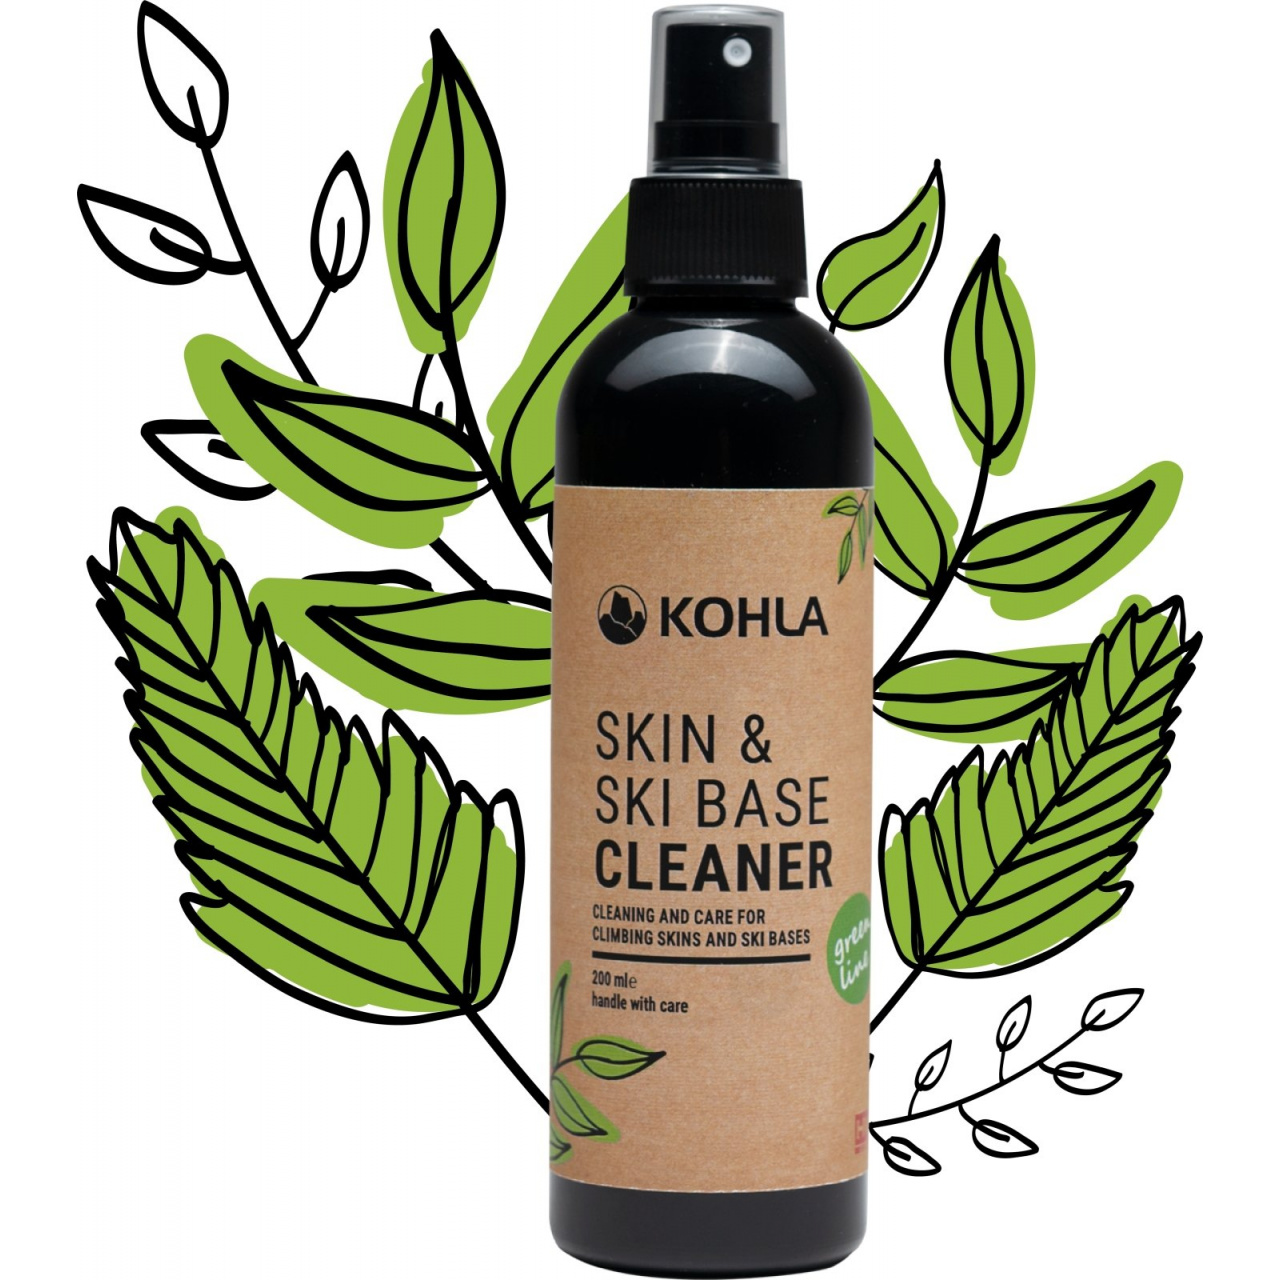 Kohla skin a skibase cleaner